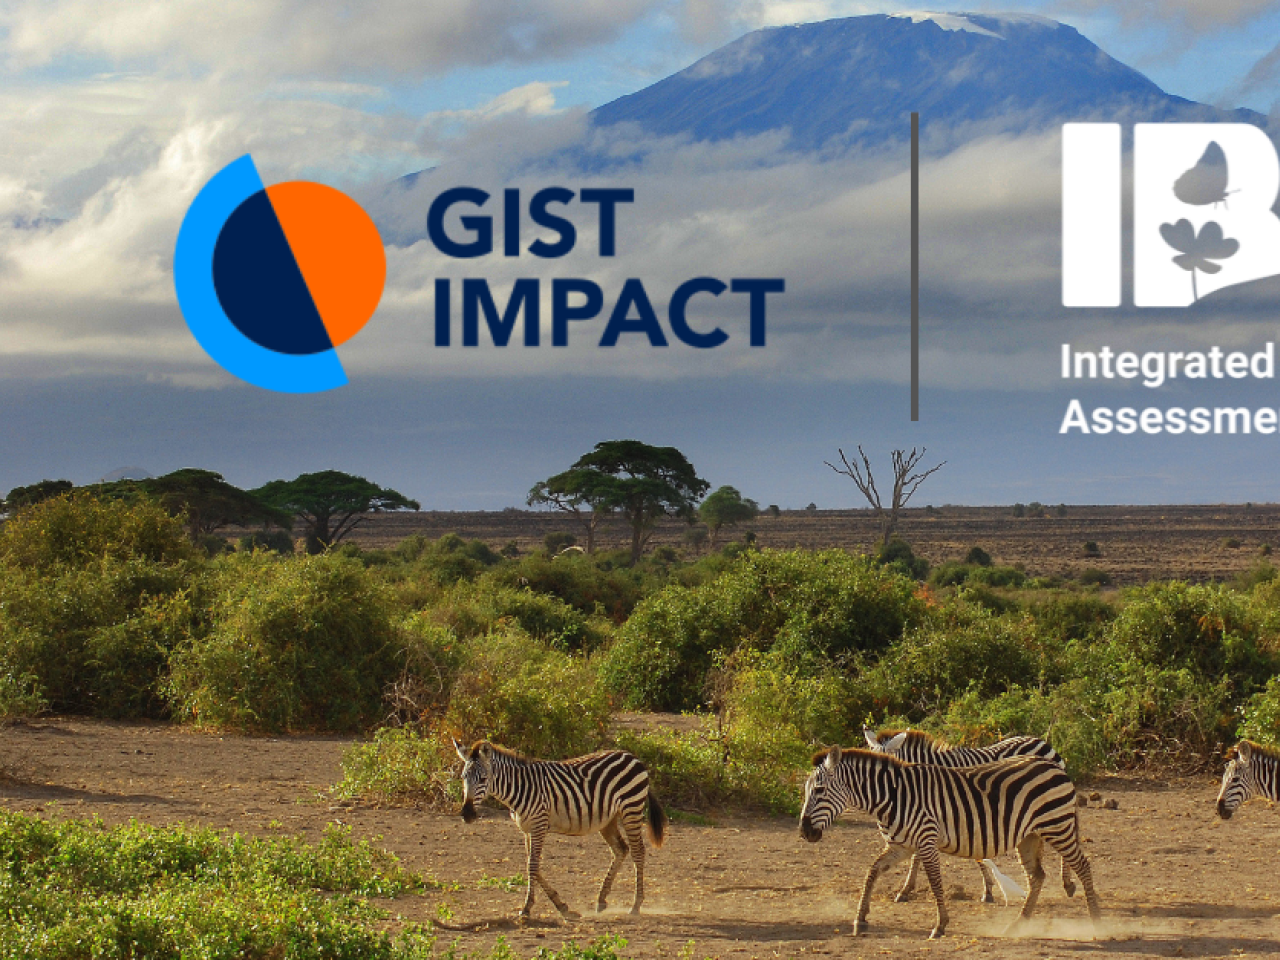 The GIST Impact and IBAT logos set against a backdrop of Kilimanjaro.